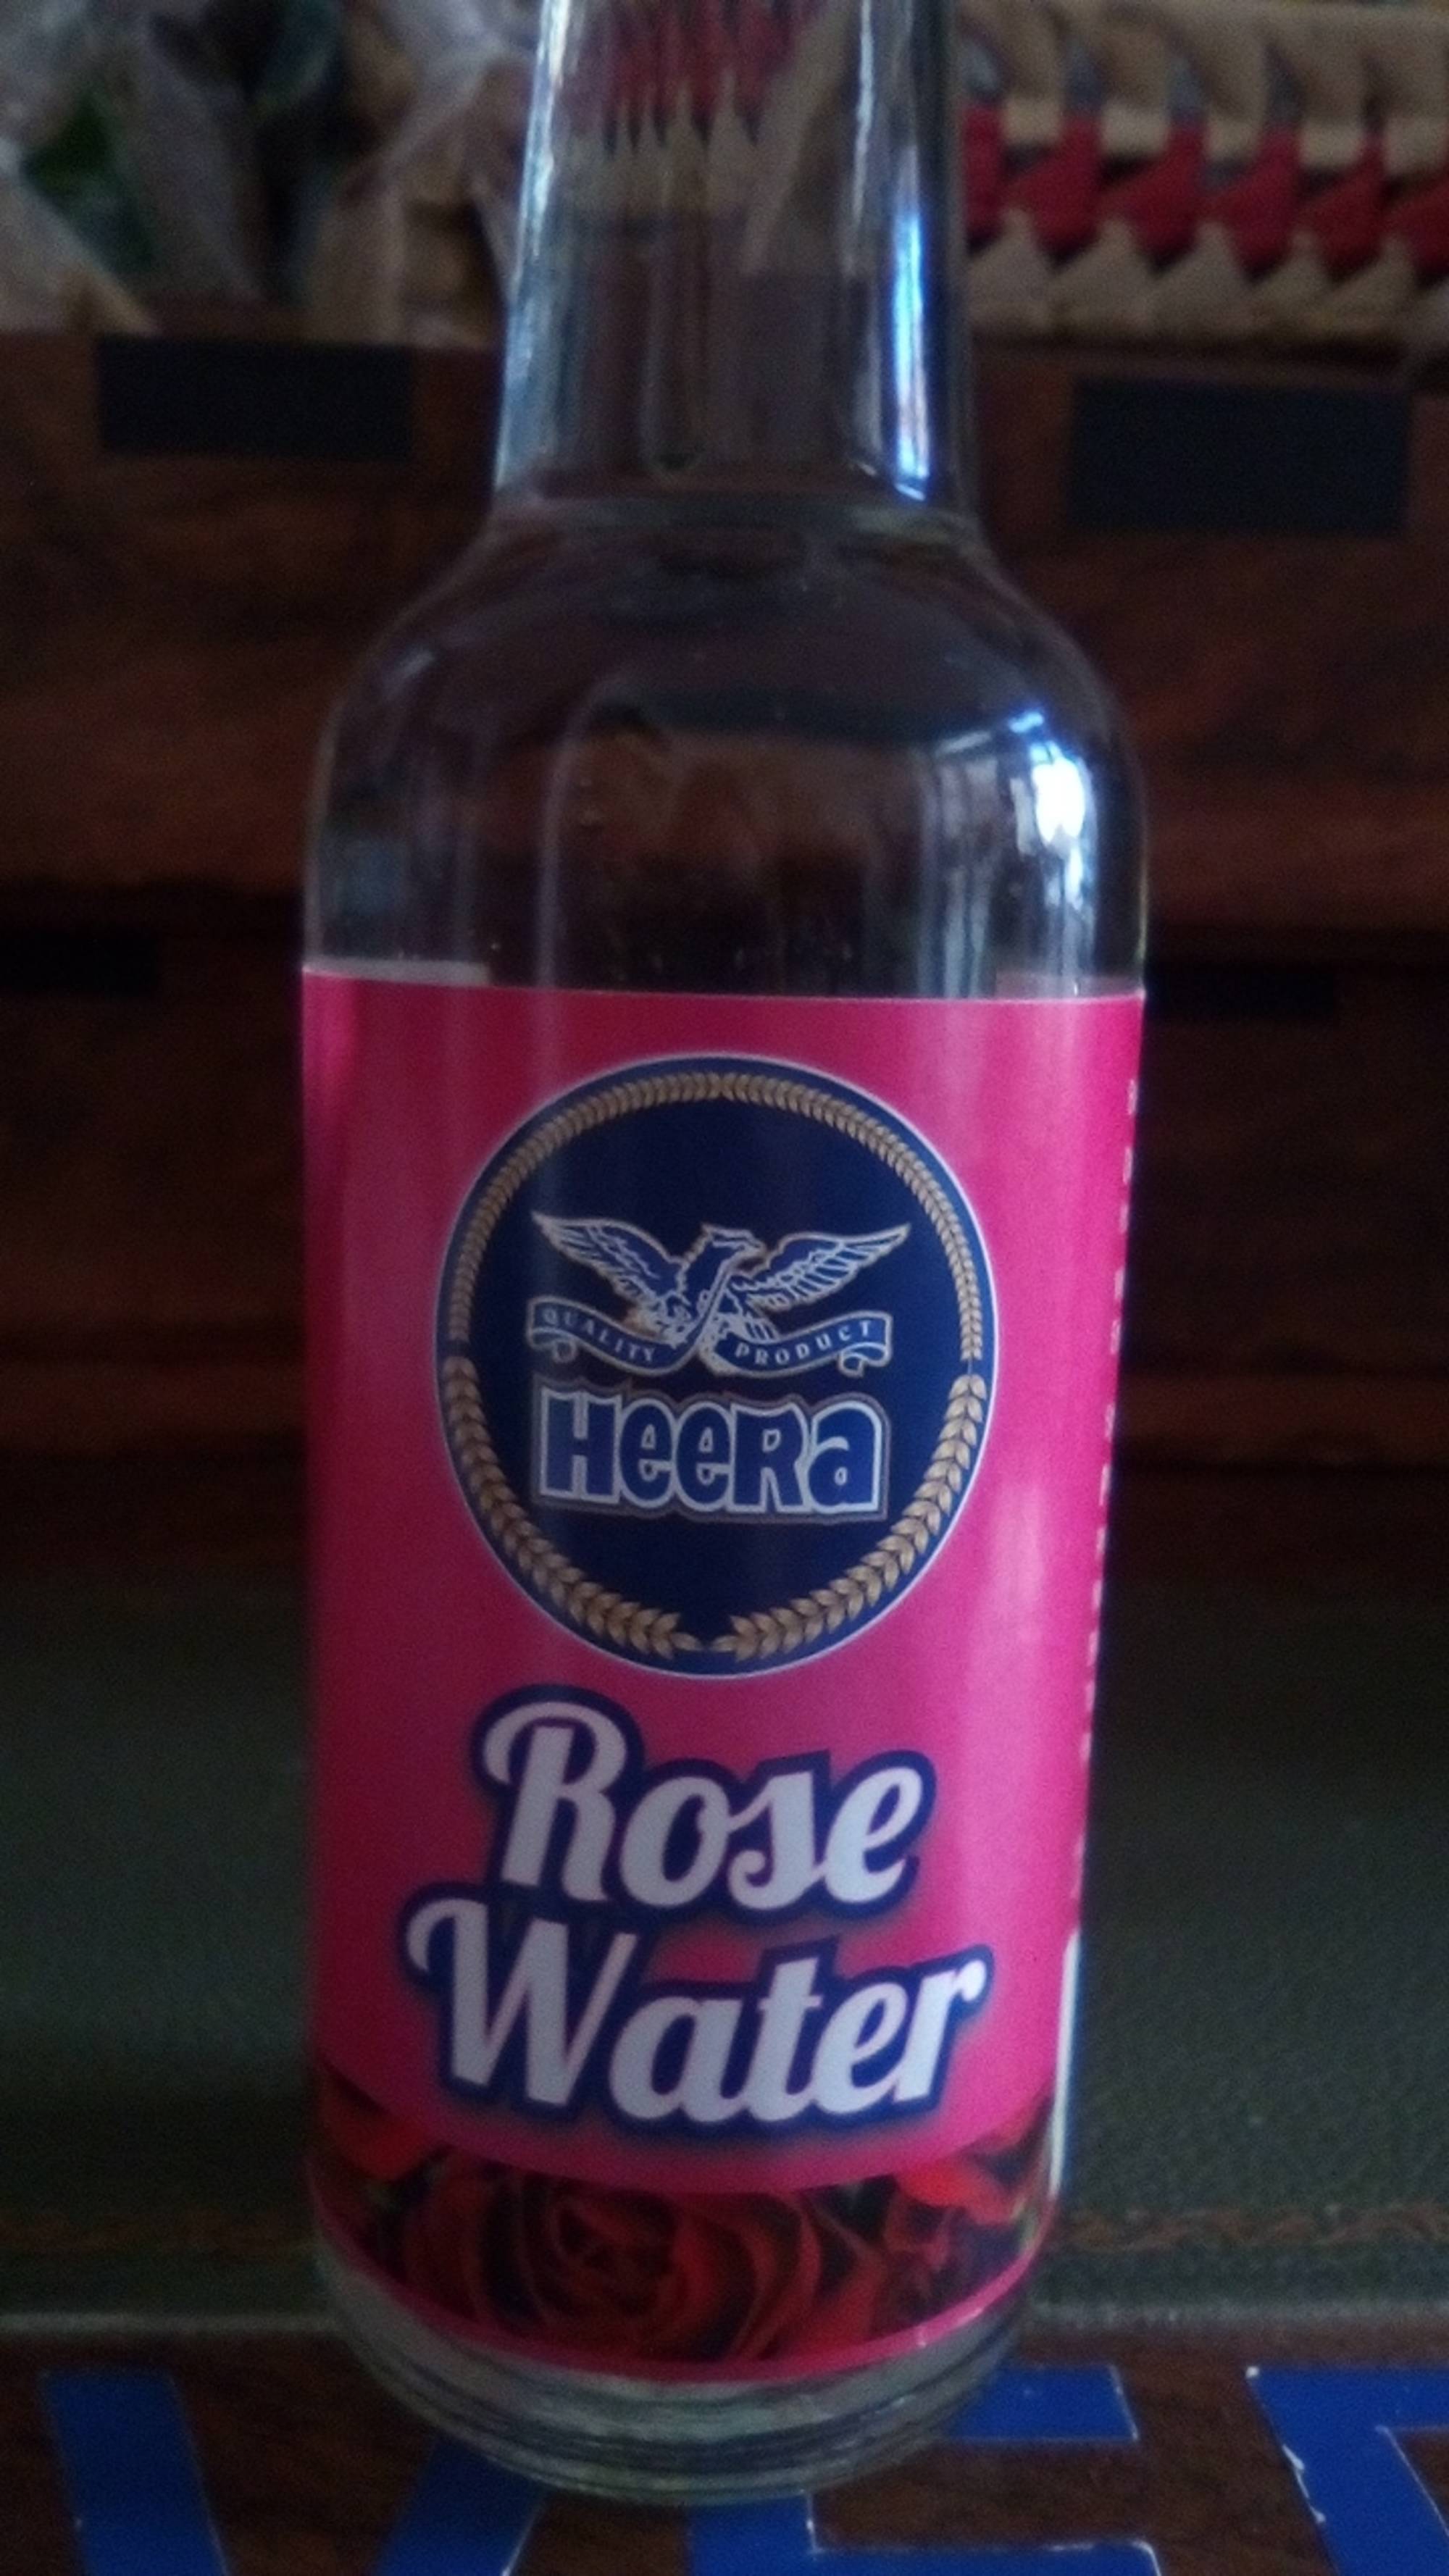 HEERA - Rose water 